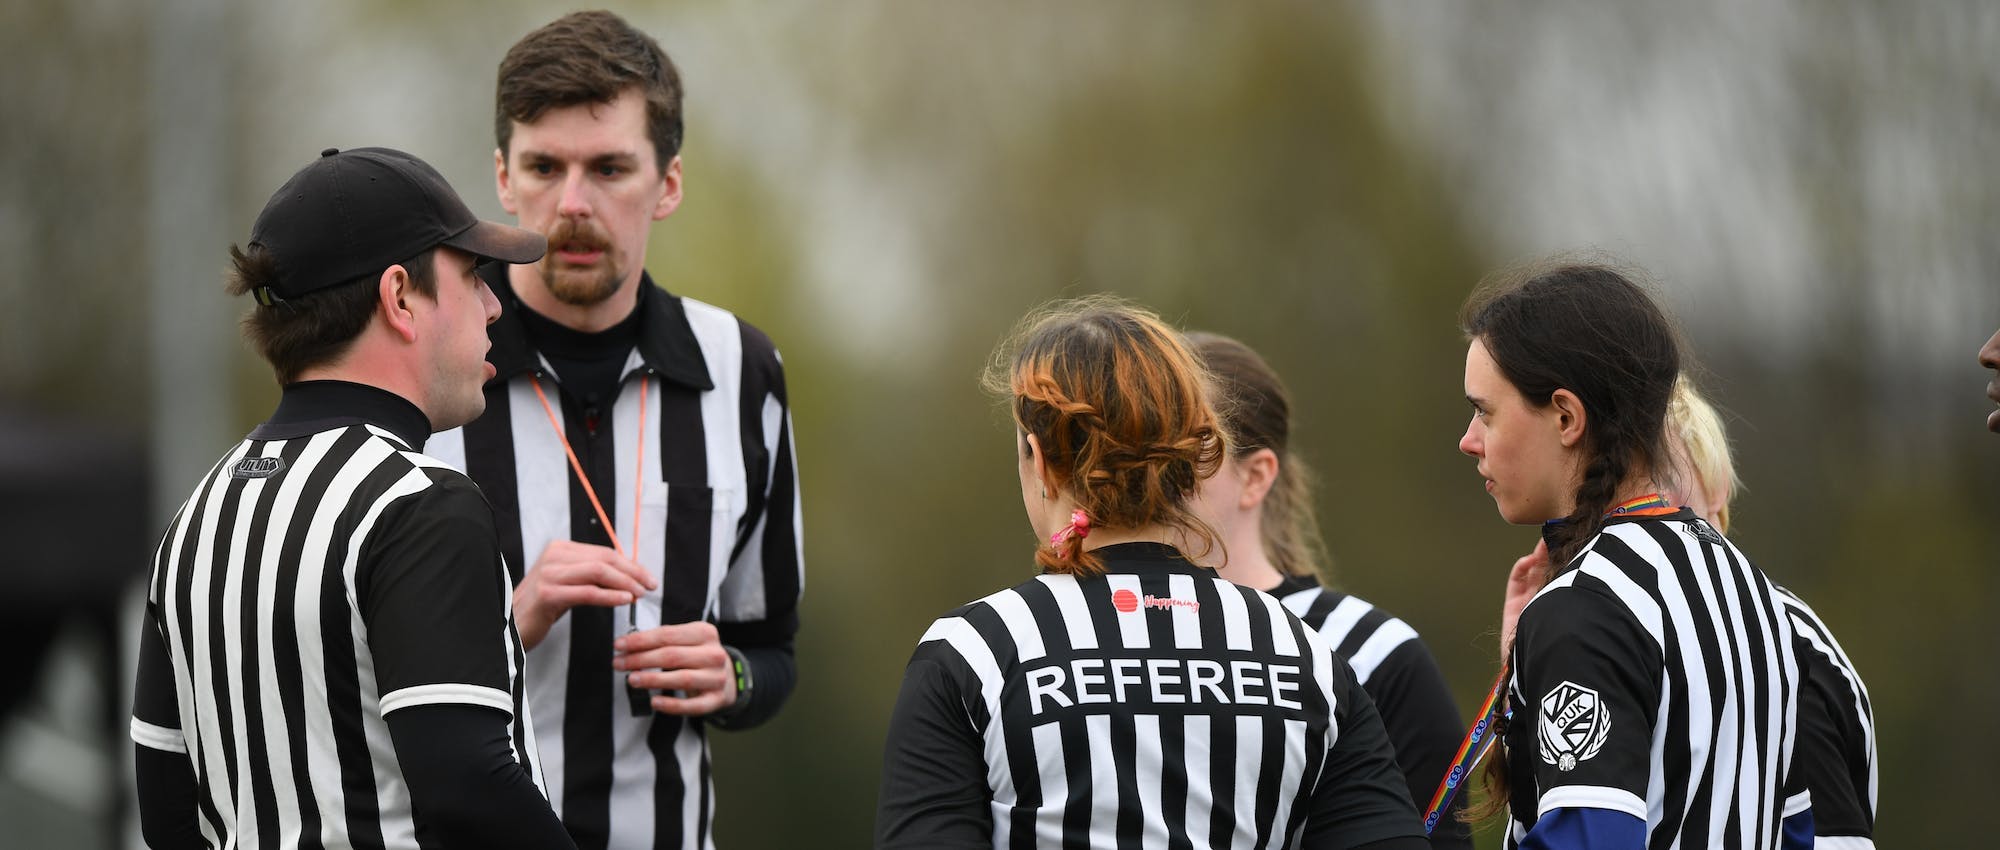 Referee 2022 BQC